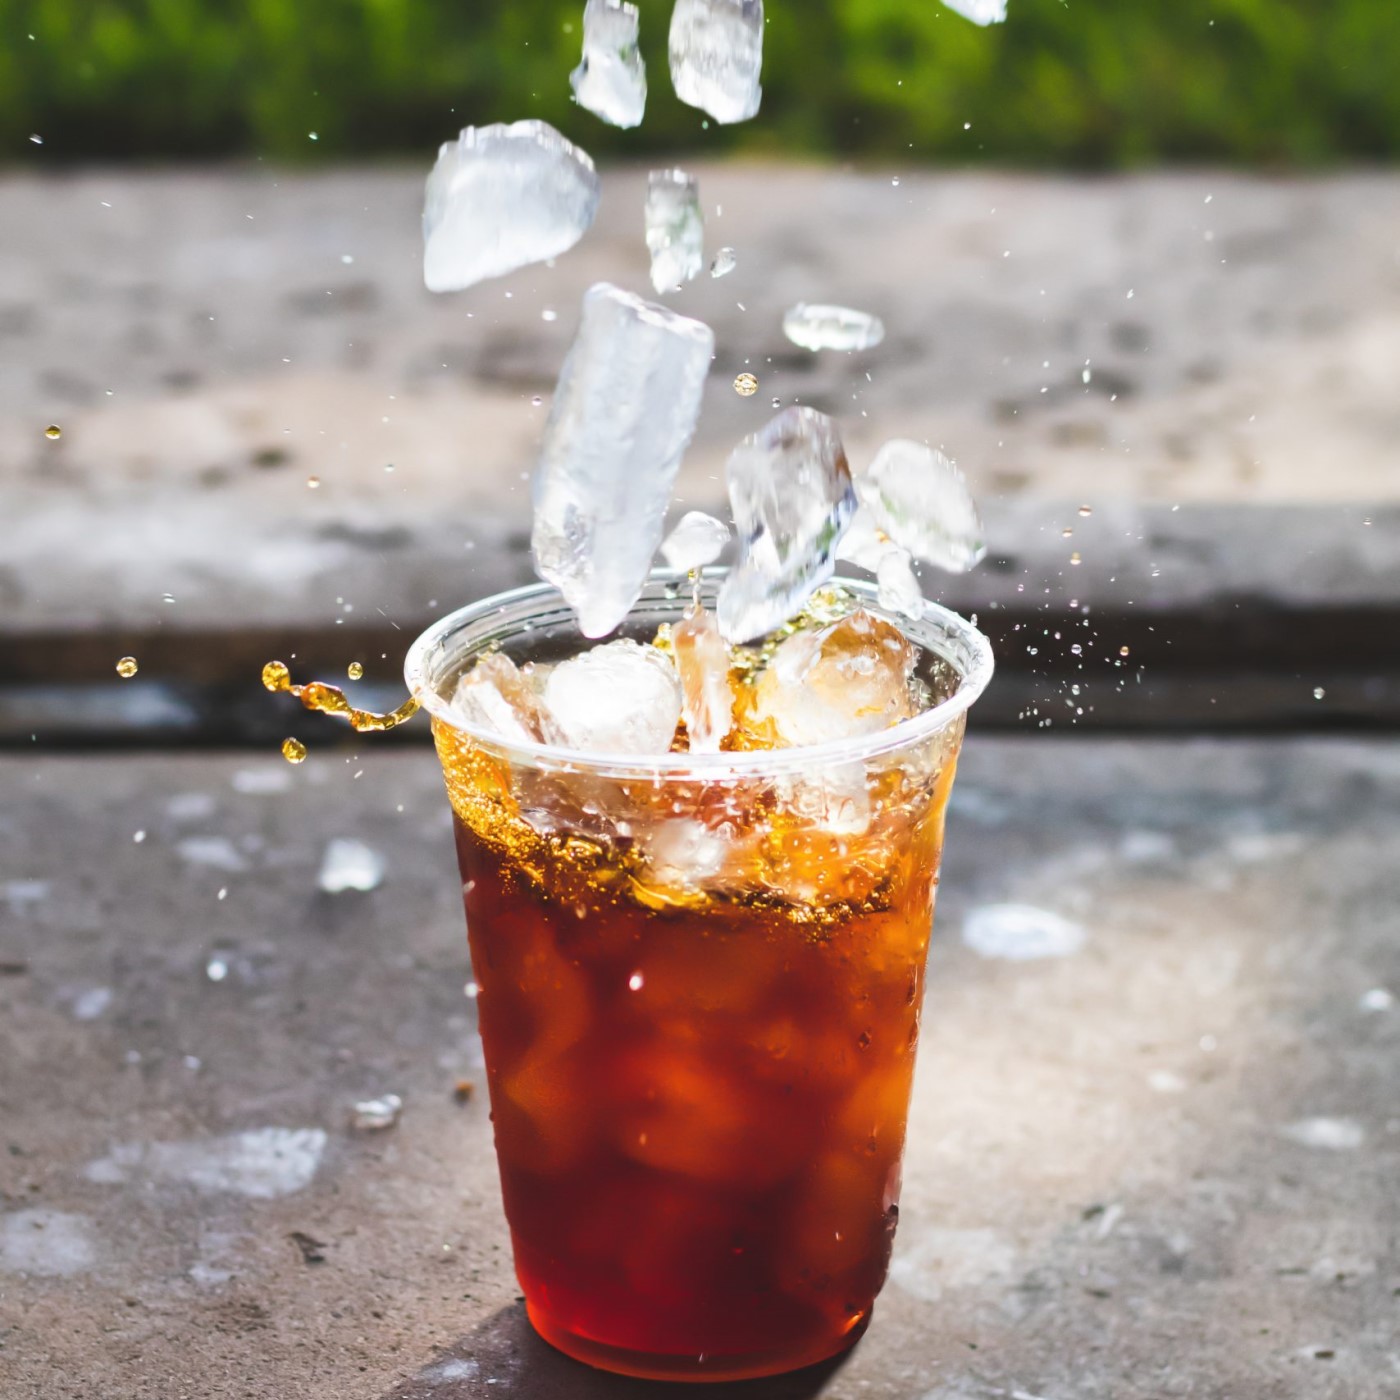 Sugary drinks linked to ADHD